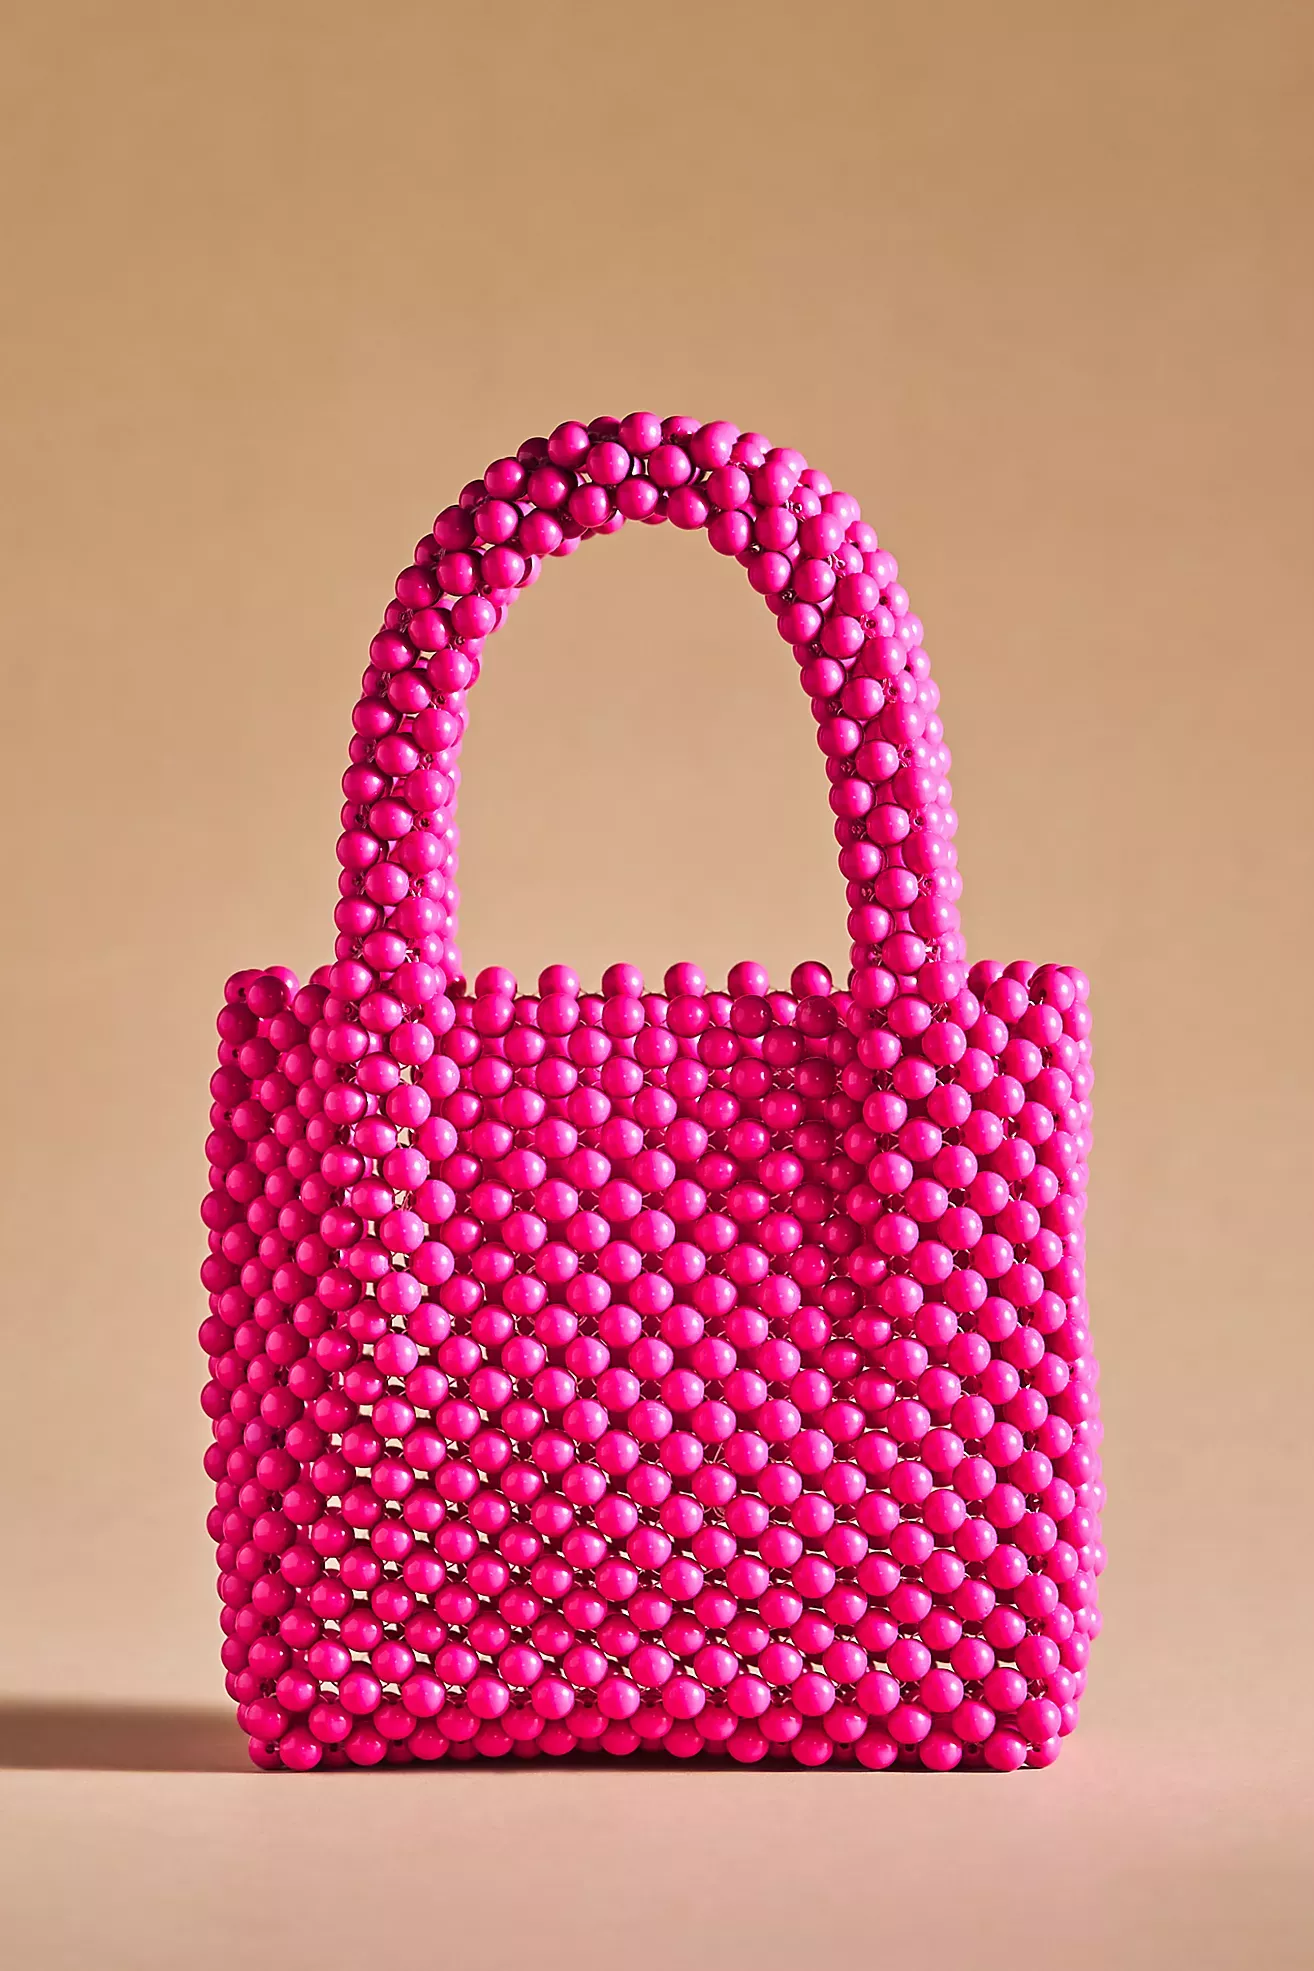 Prada Re-Edition 2005 crochet bag curated on LTK